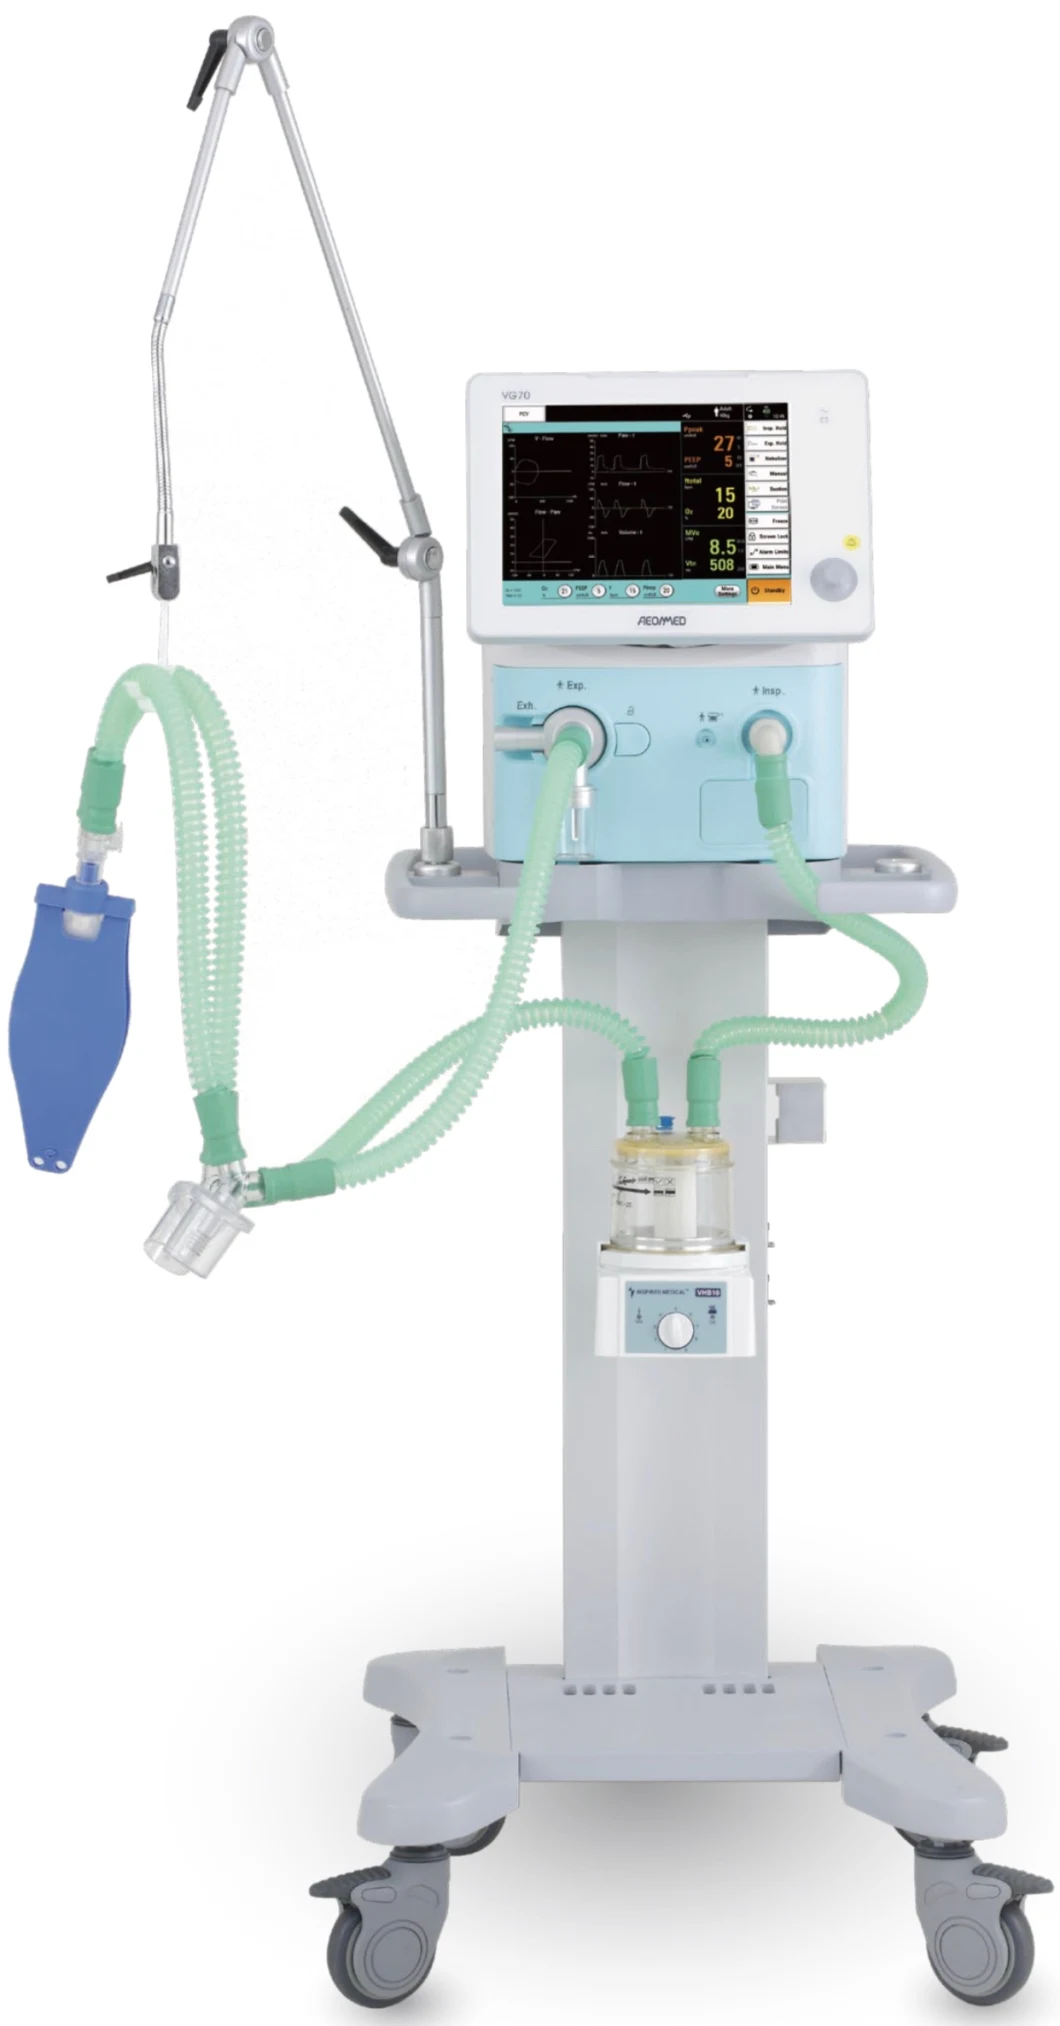 Vg70 Hospital Medical ICU Invasive Non-Invasive Ventilators Portable Mechaincal Ventilator Machine Respirator